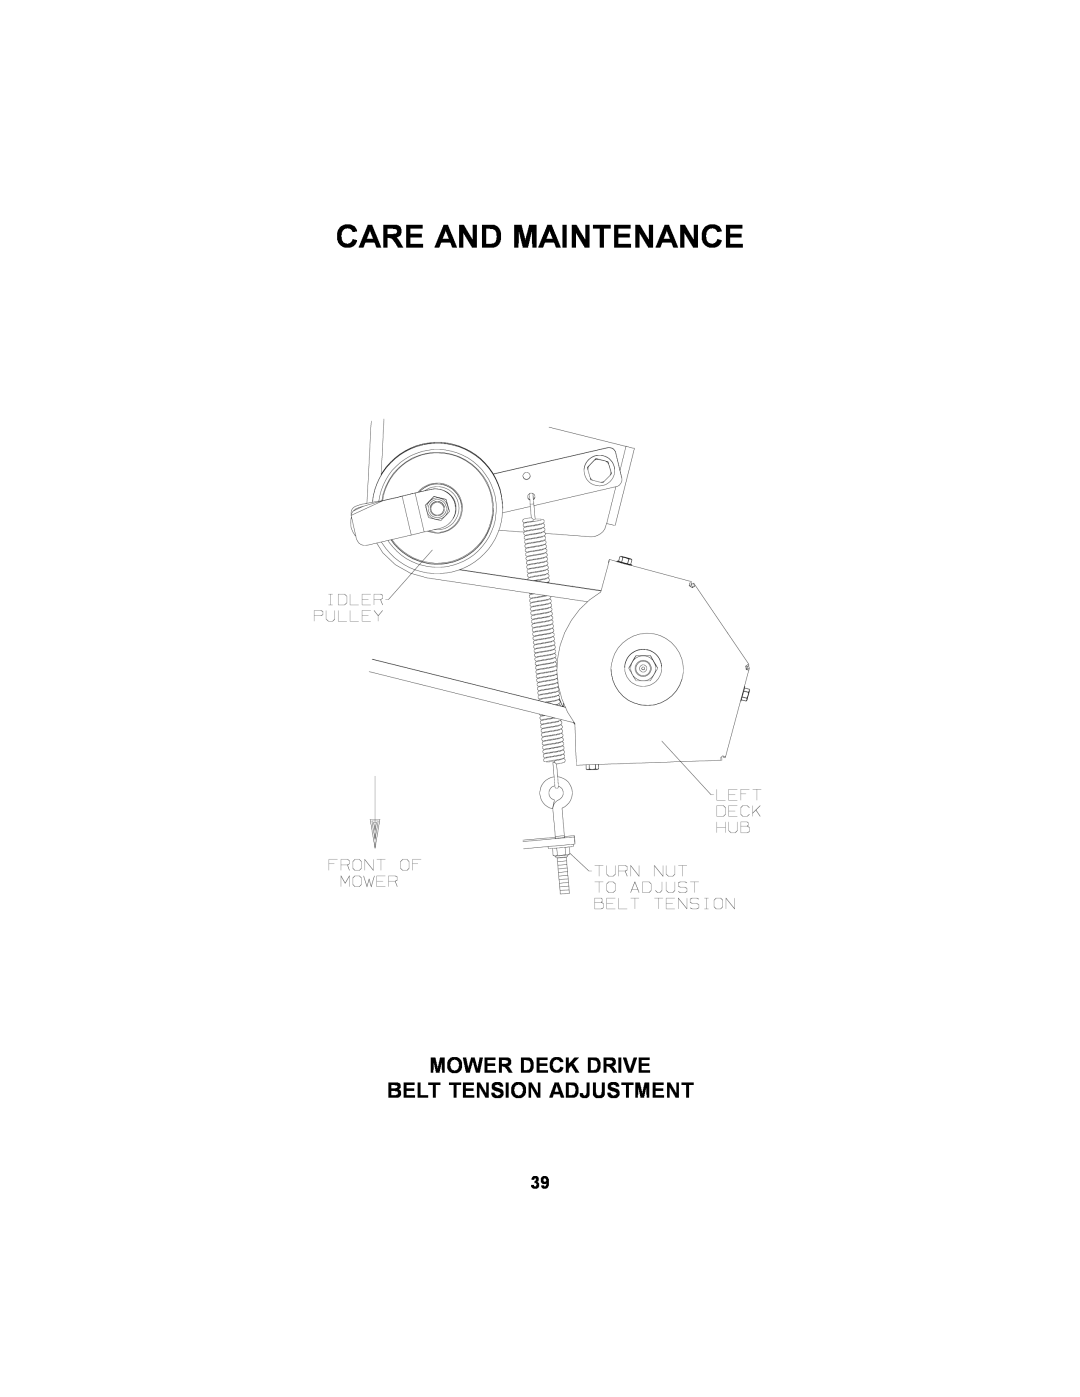 Dixon 36 manual Care And Maintenance, Mower Deck Drive Belt Tension Adjustment 